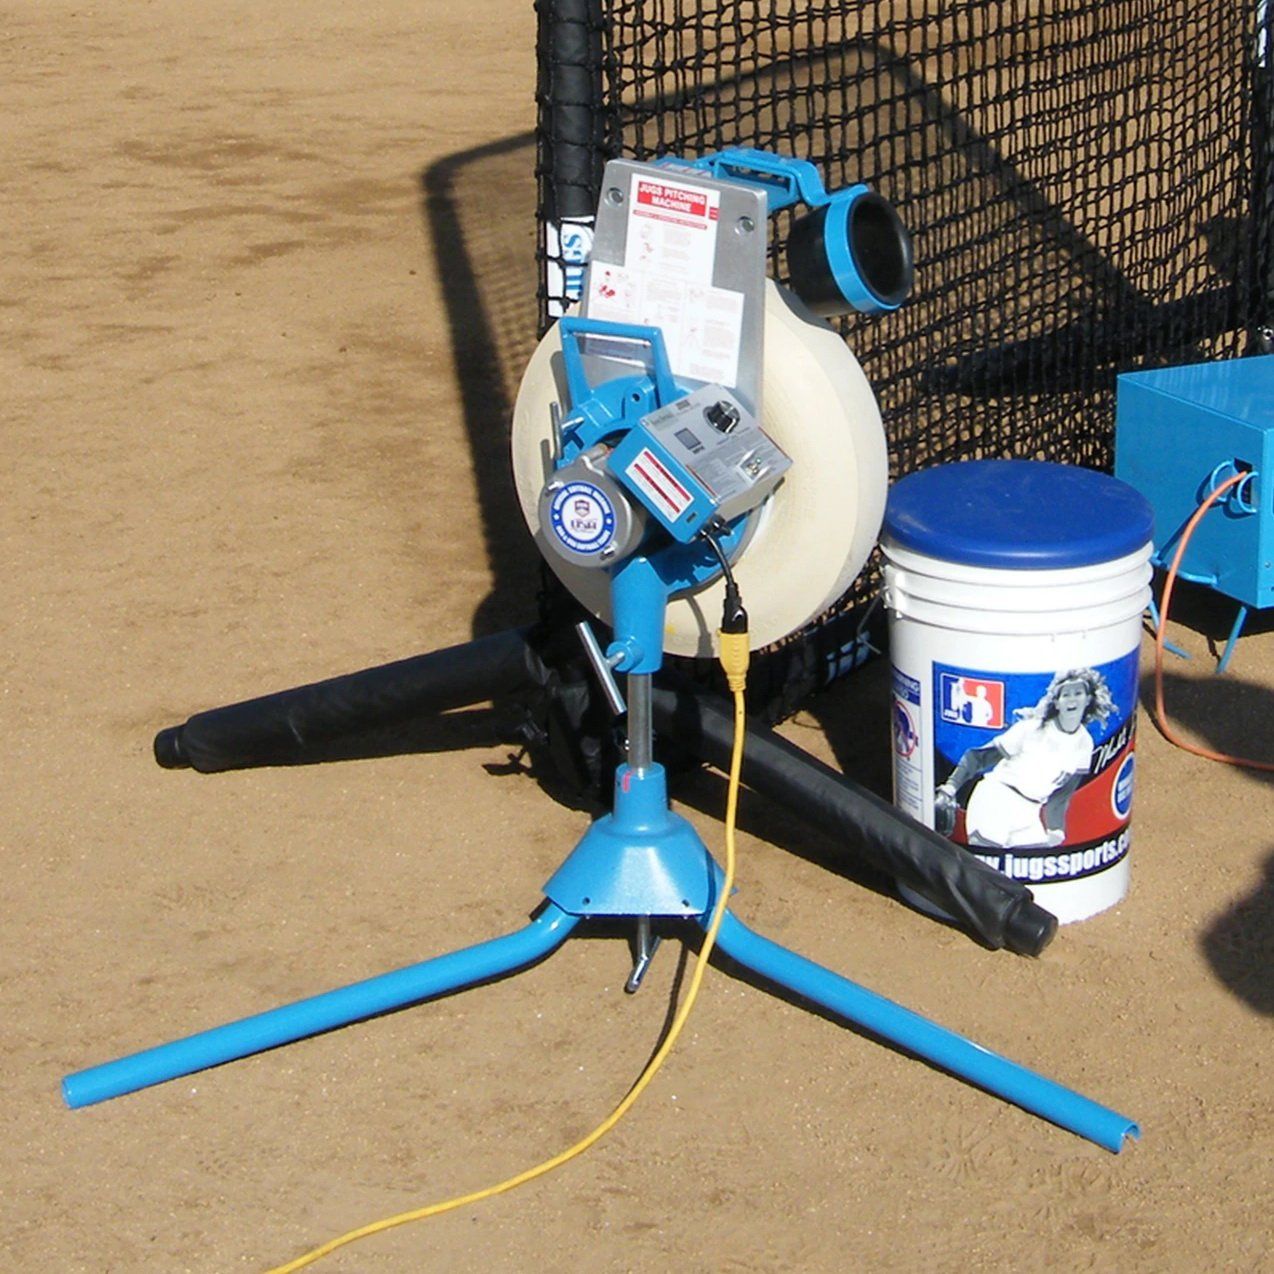 Jugs BP®1 Pitching Machine for Baseball or Softball